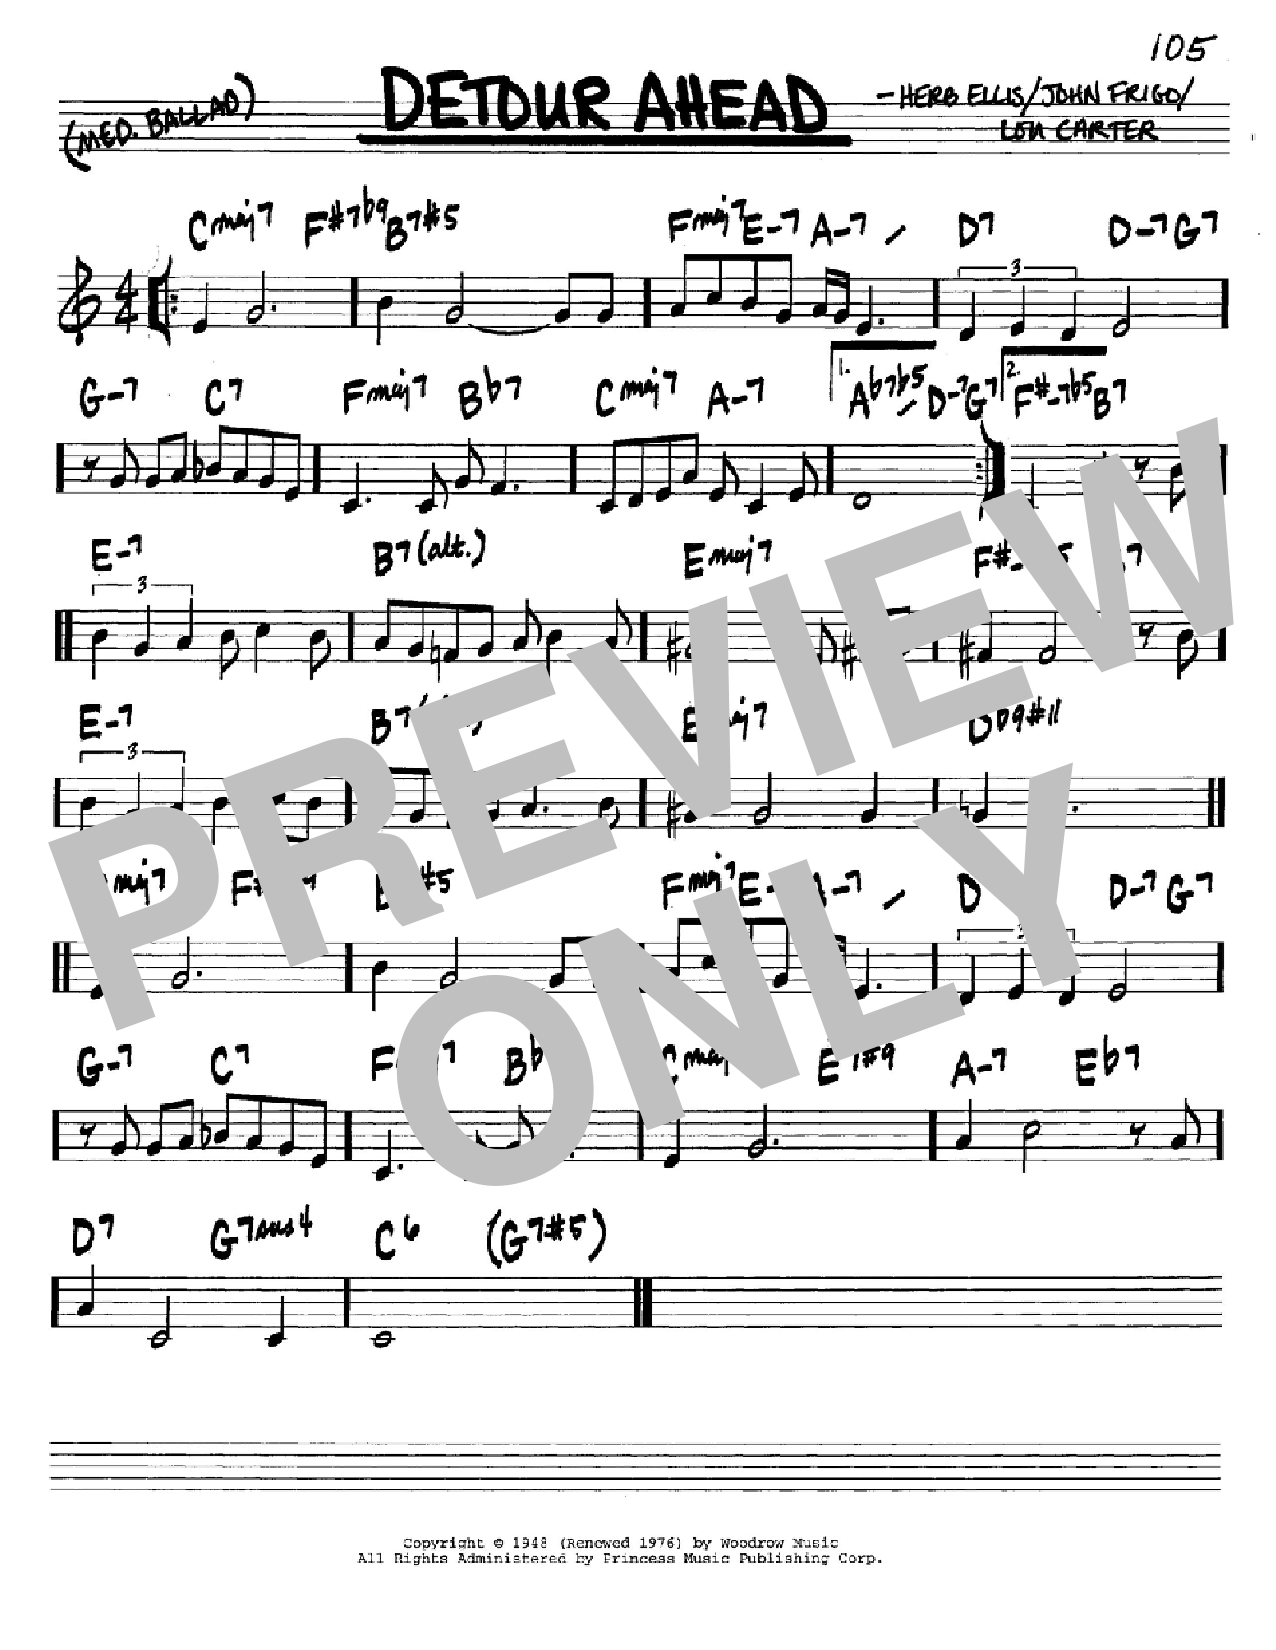 Herb Ellis Detour Ahead Sheet Music Notes & Chords for Electric Guitar Transcription - Download or Print PDF